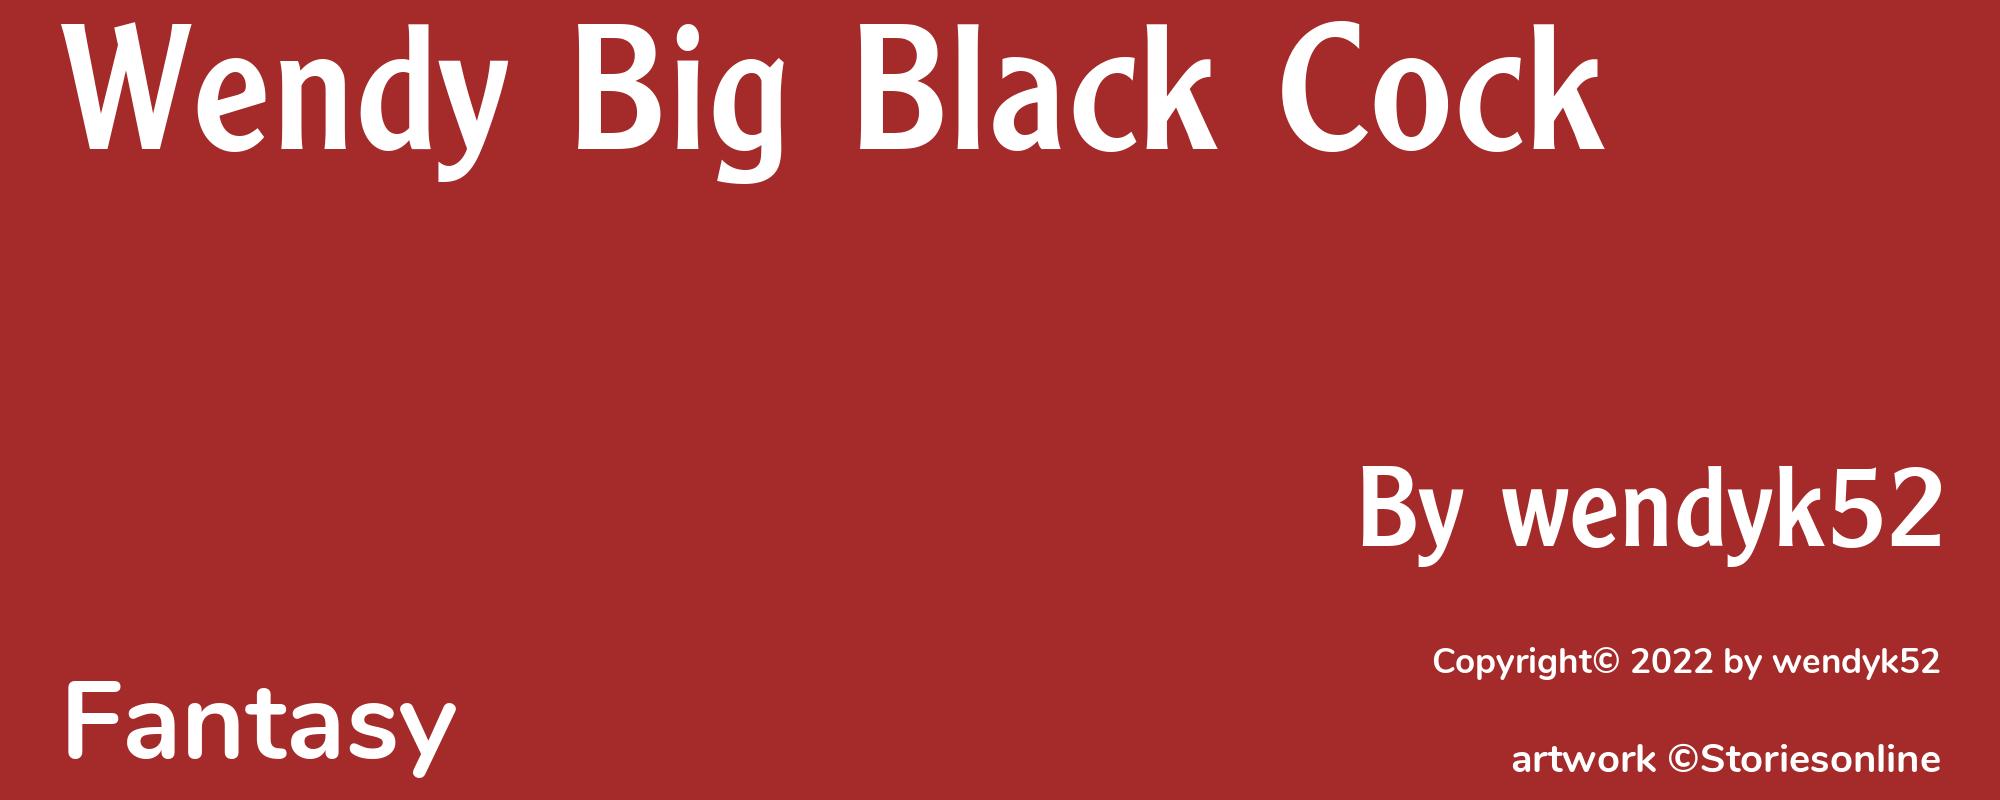 Wendy Big Black Cock - Cover